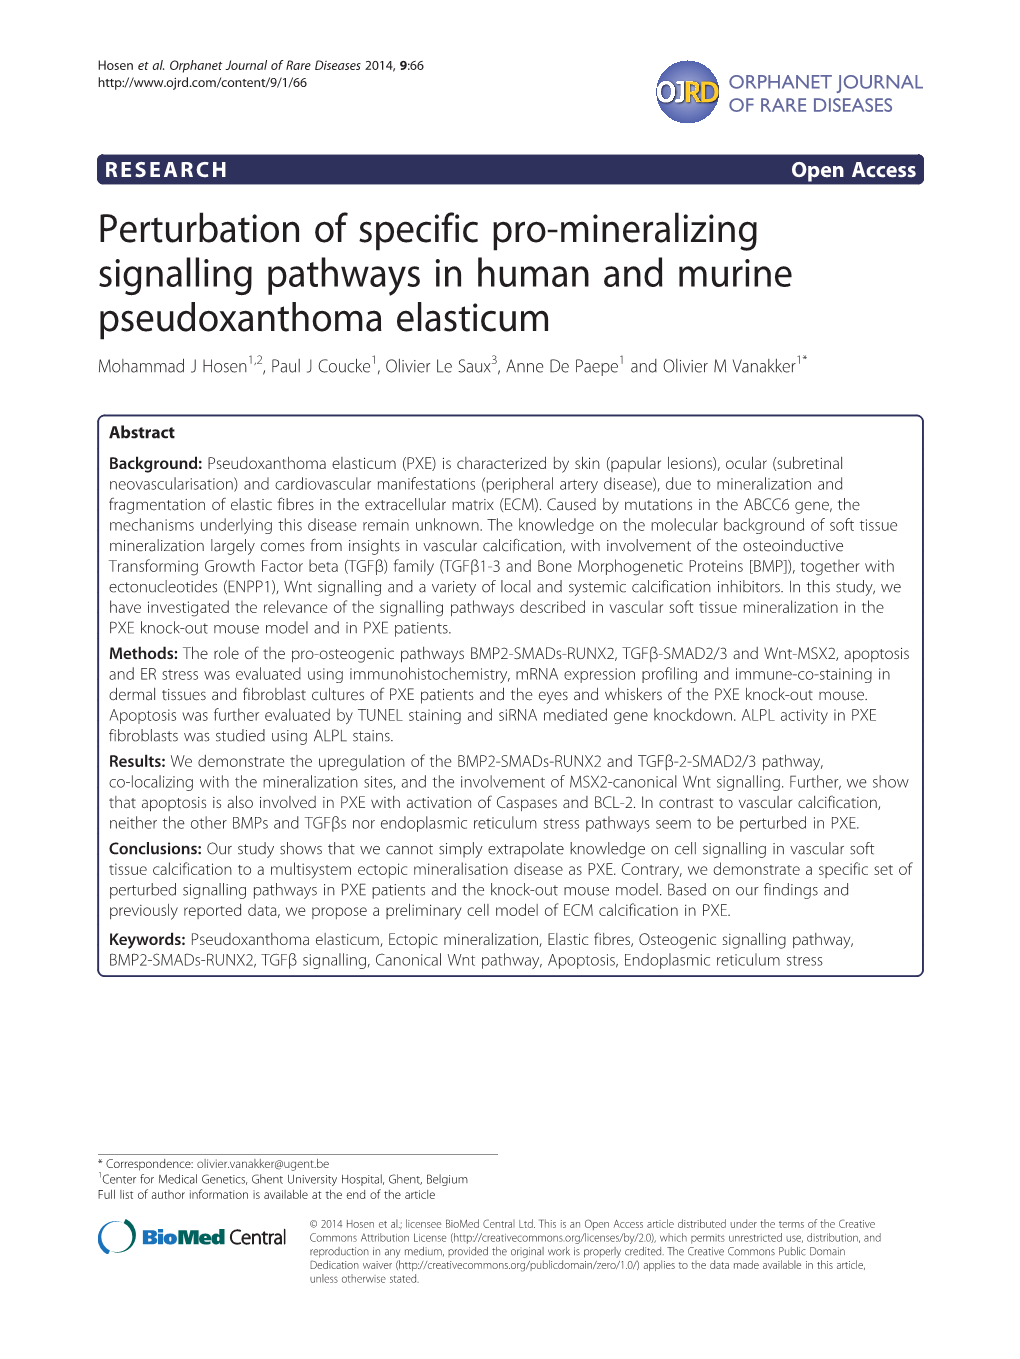 Perturbation of Specific Pro-Mineralizing Signalling